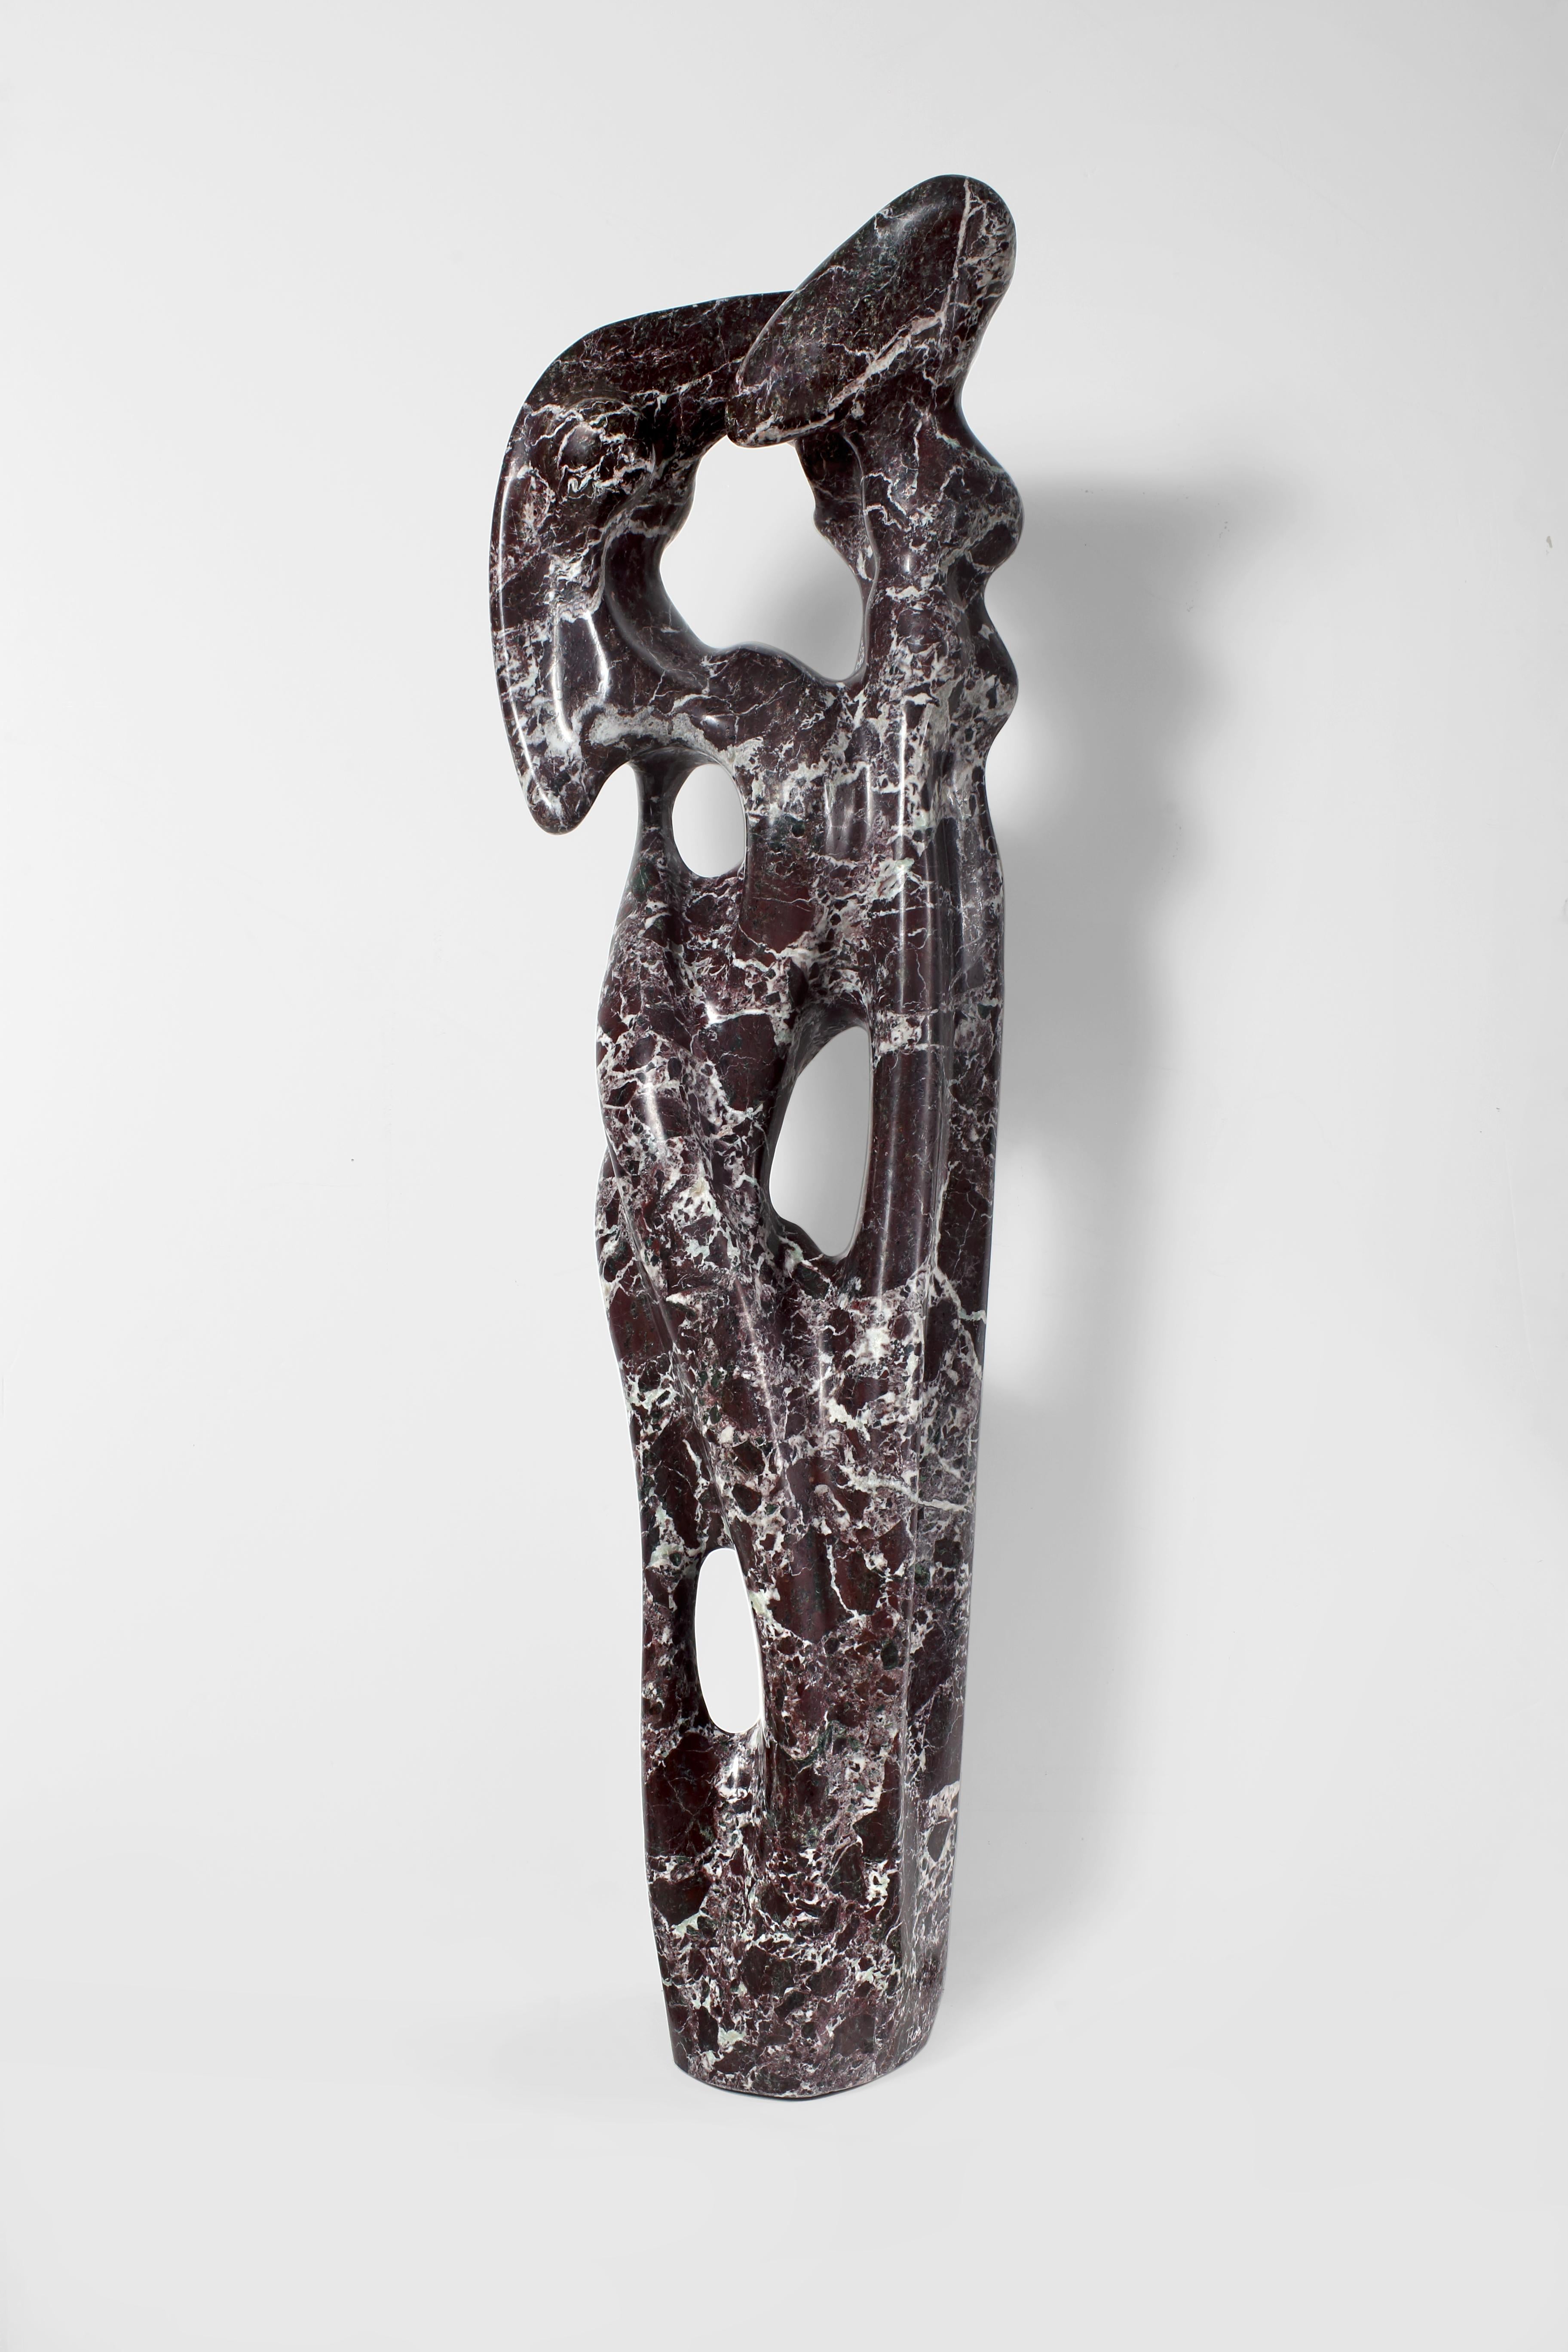 Roberto Perez Crespo Abstract Sculpture - Watchman, rosso levanto marble